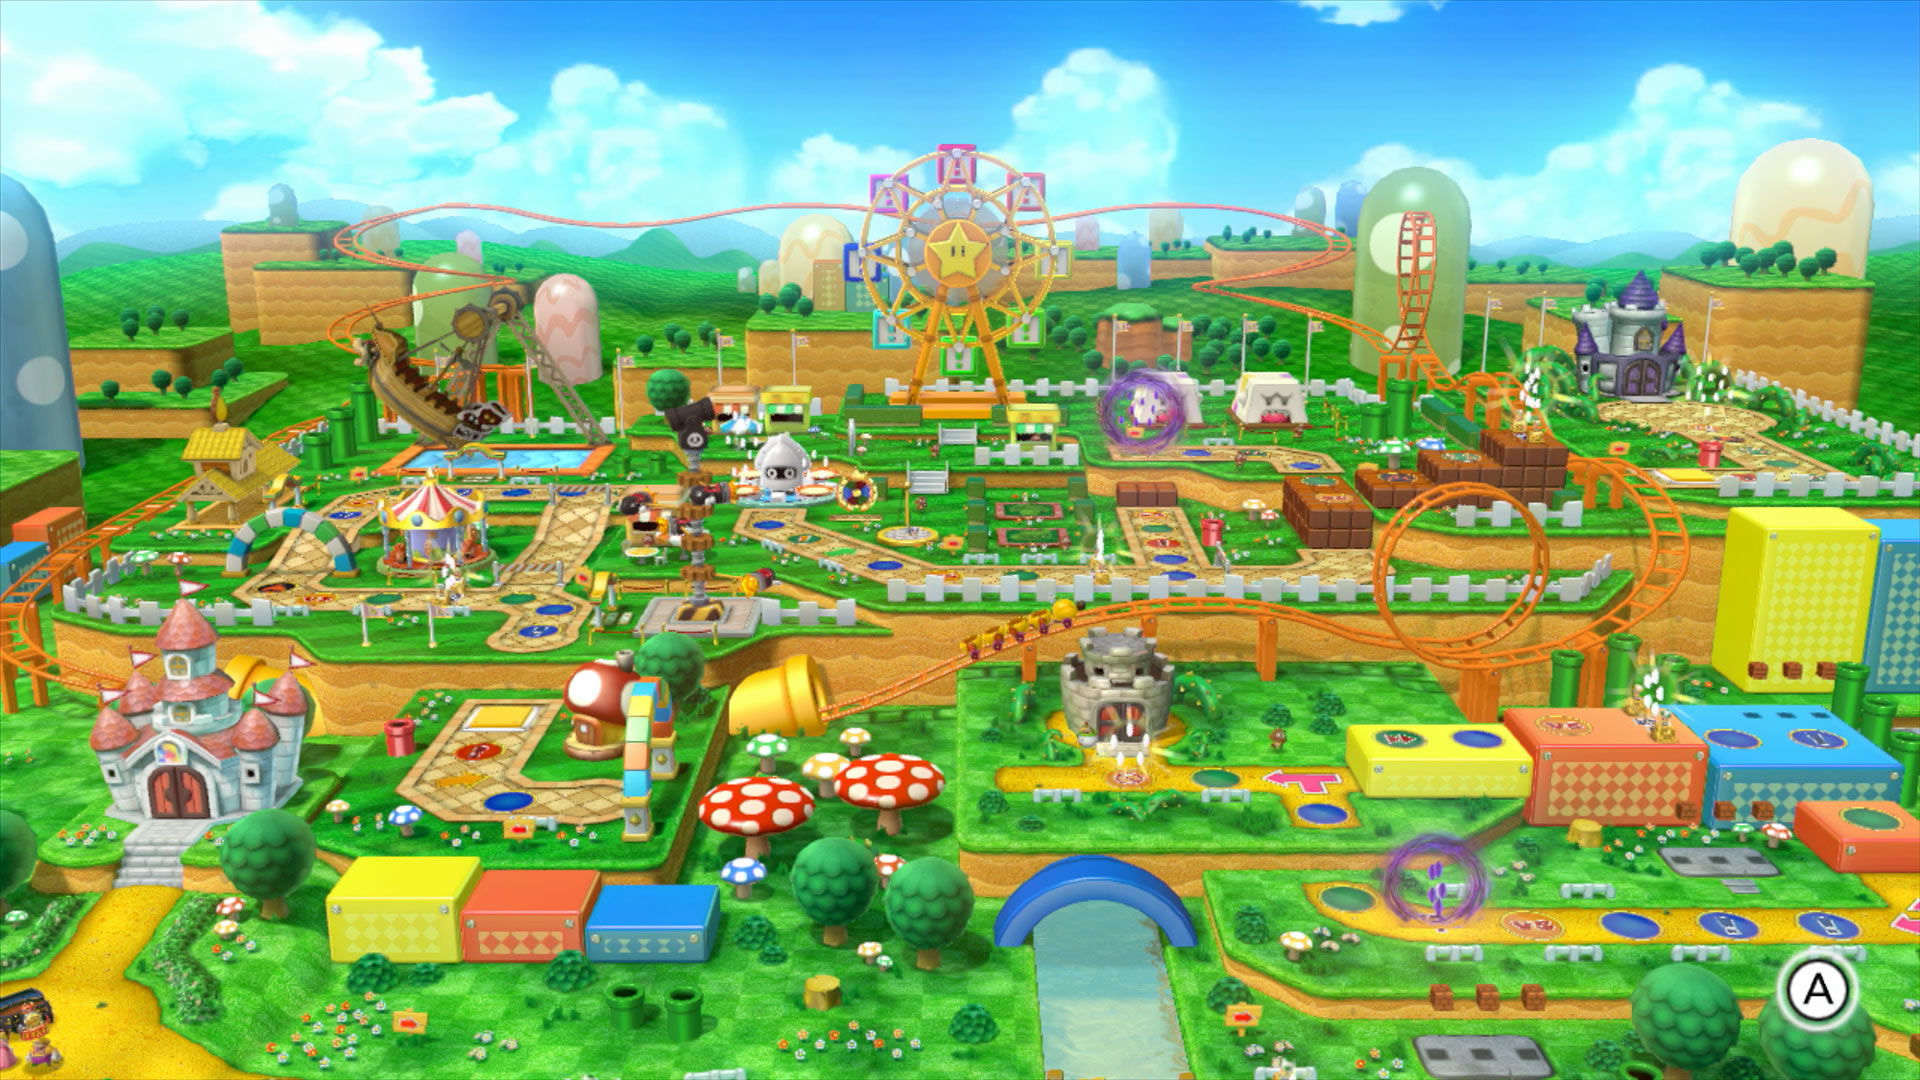 Mario Party 10 (Wii U) Screenshots